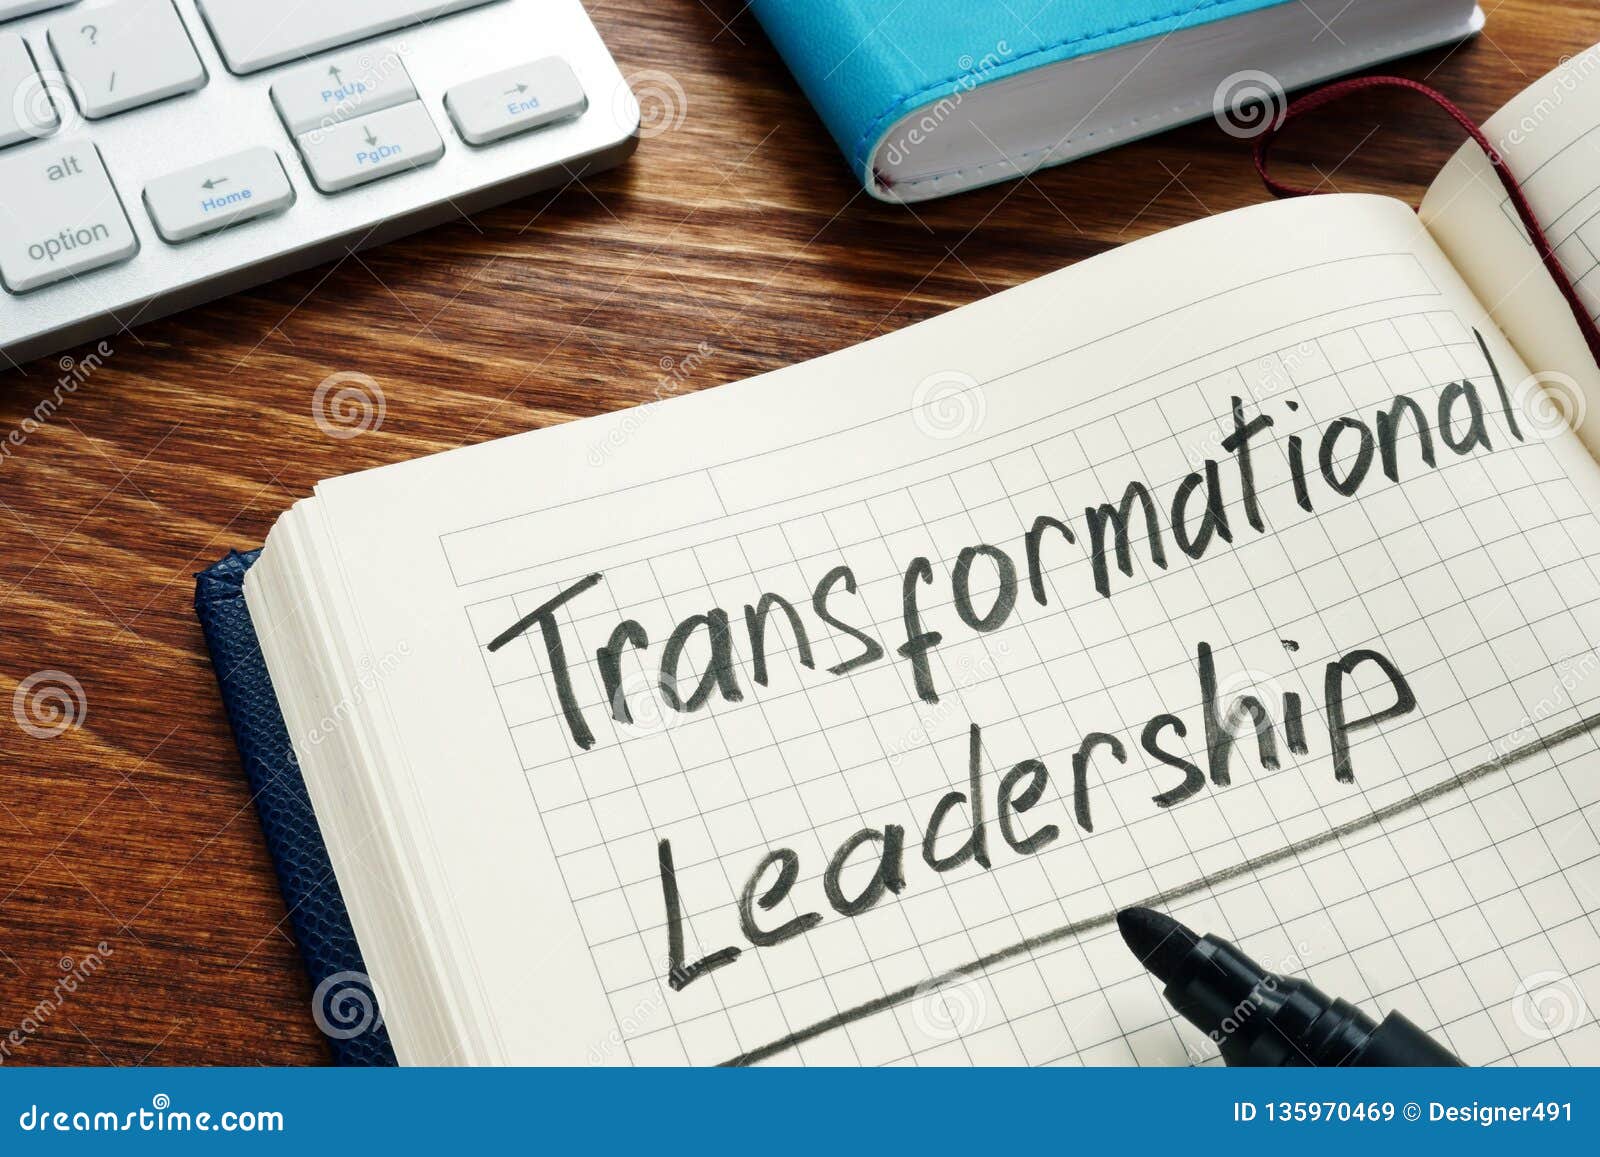 transformational leadership handwritten in the notepad